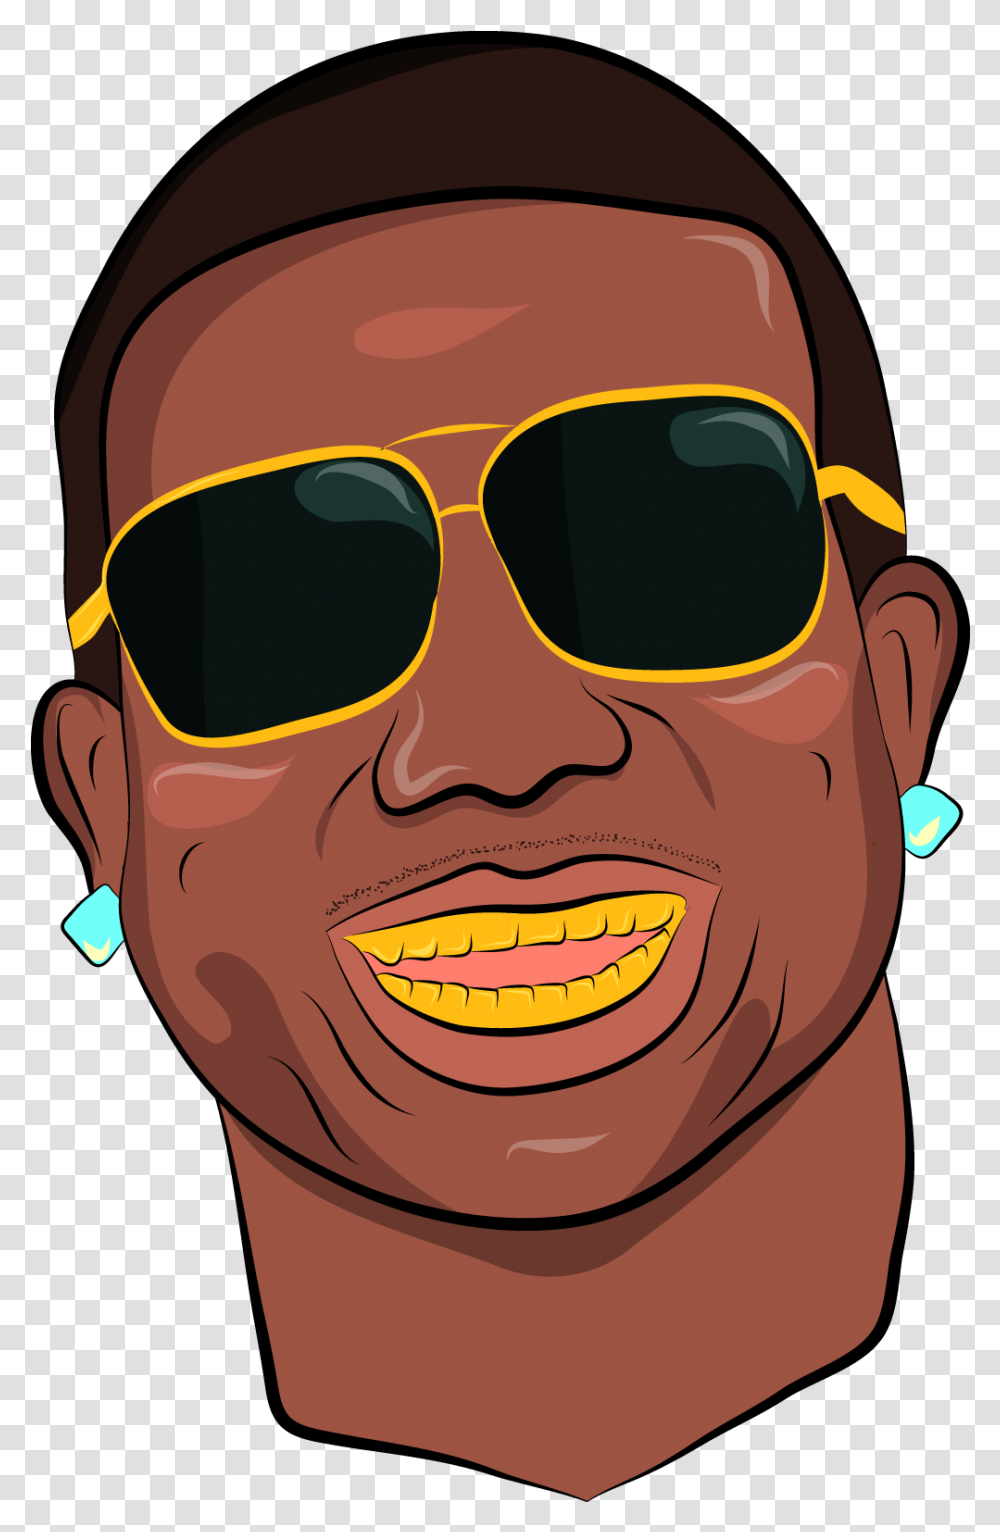 Gucci Mane 2016 Gucci Mane Cartoon, Face, Sunglasses, Accessories, Accessory Transparent Png